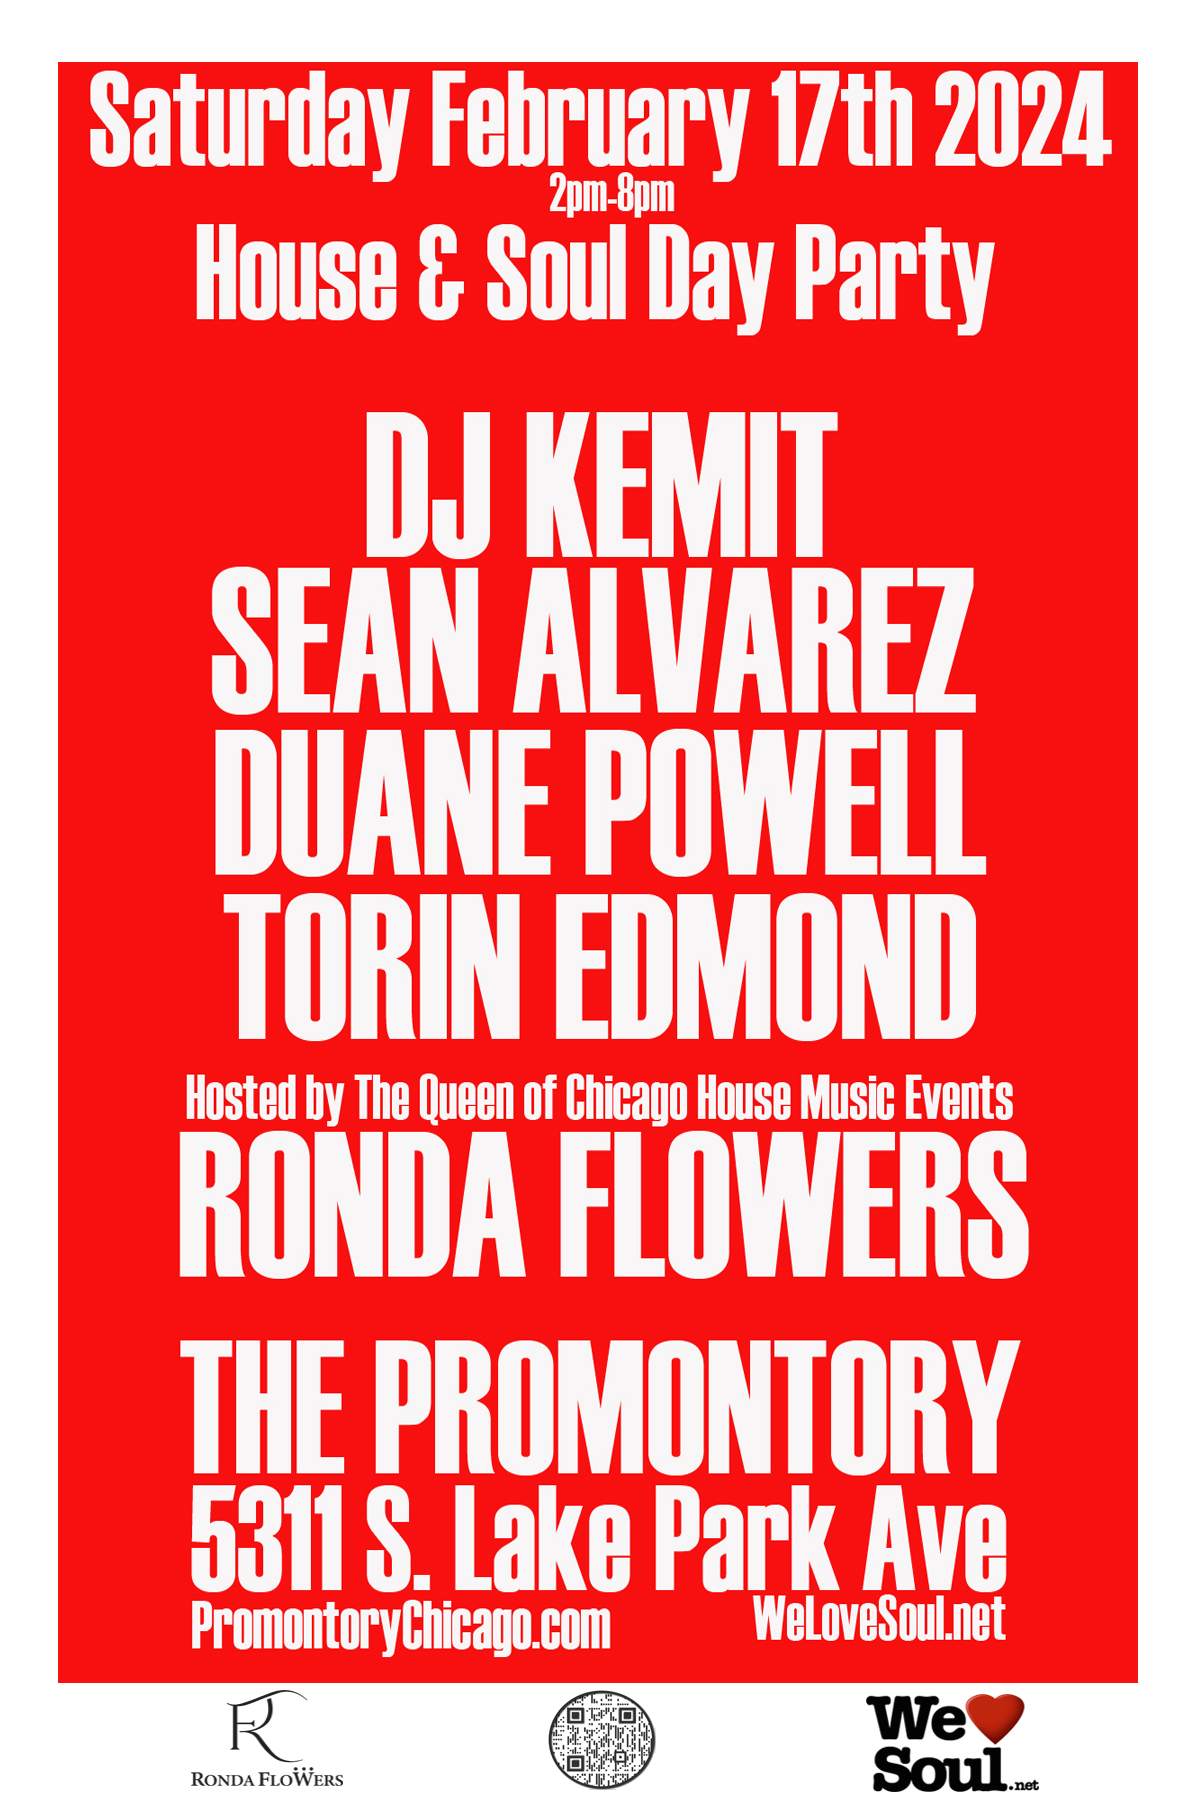 House & Soul Day Party featuring DJ Kemit, Duane Powell, Torin Edmond, Sean Alvarez - フライヤー表